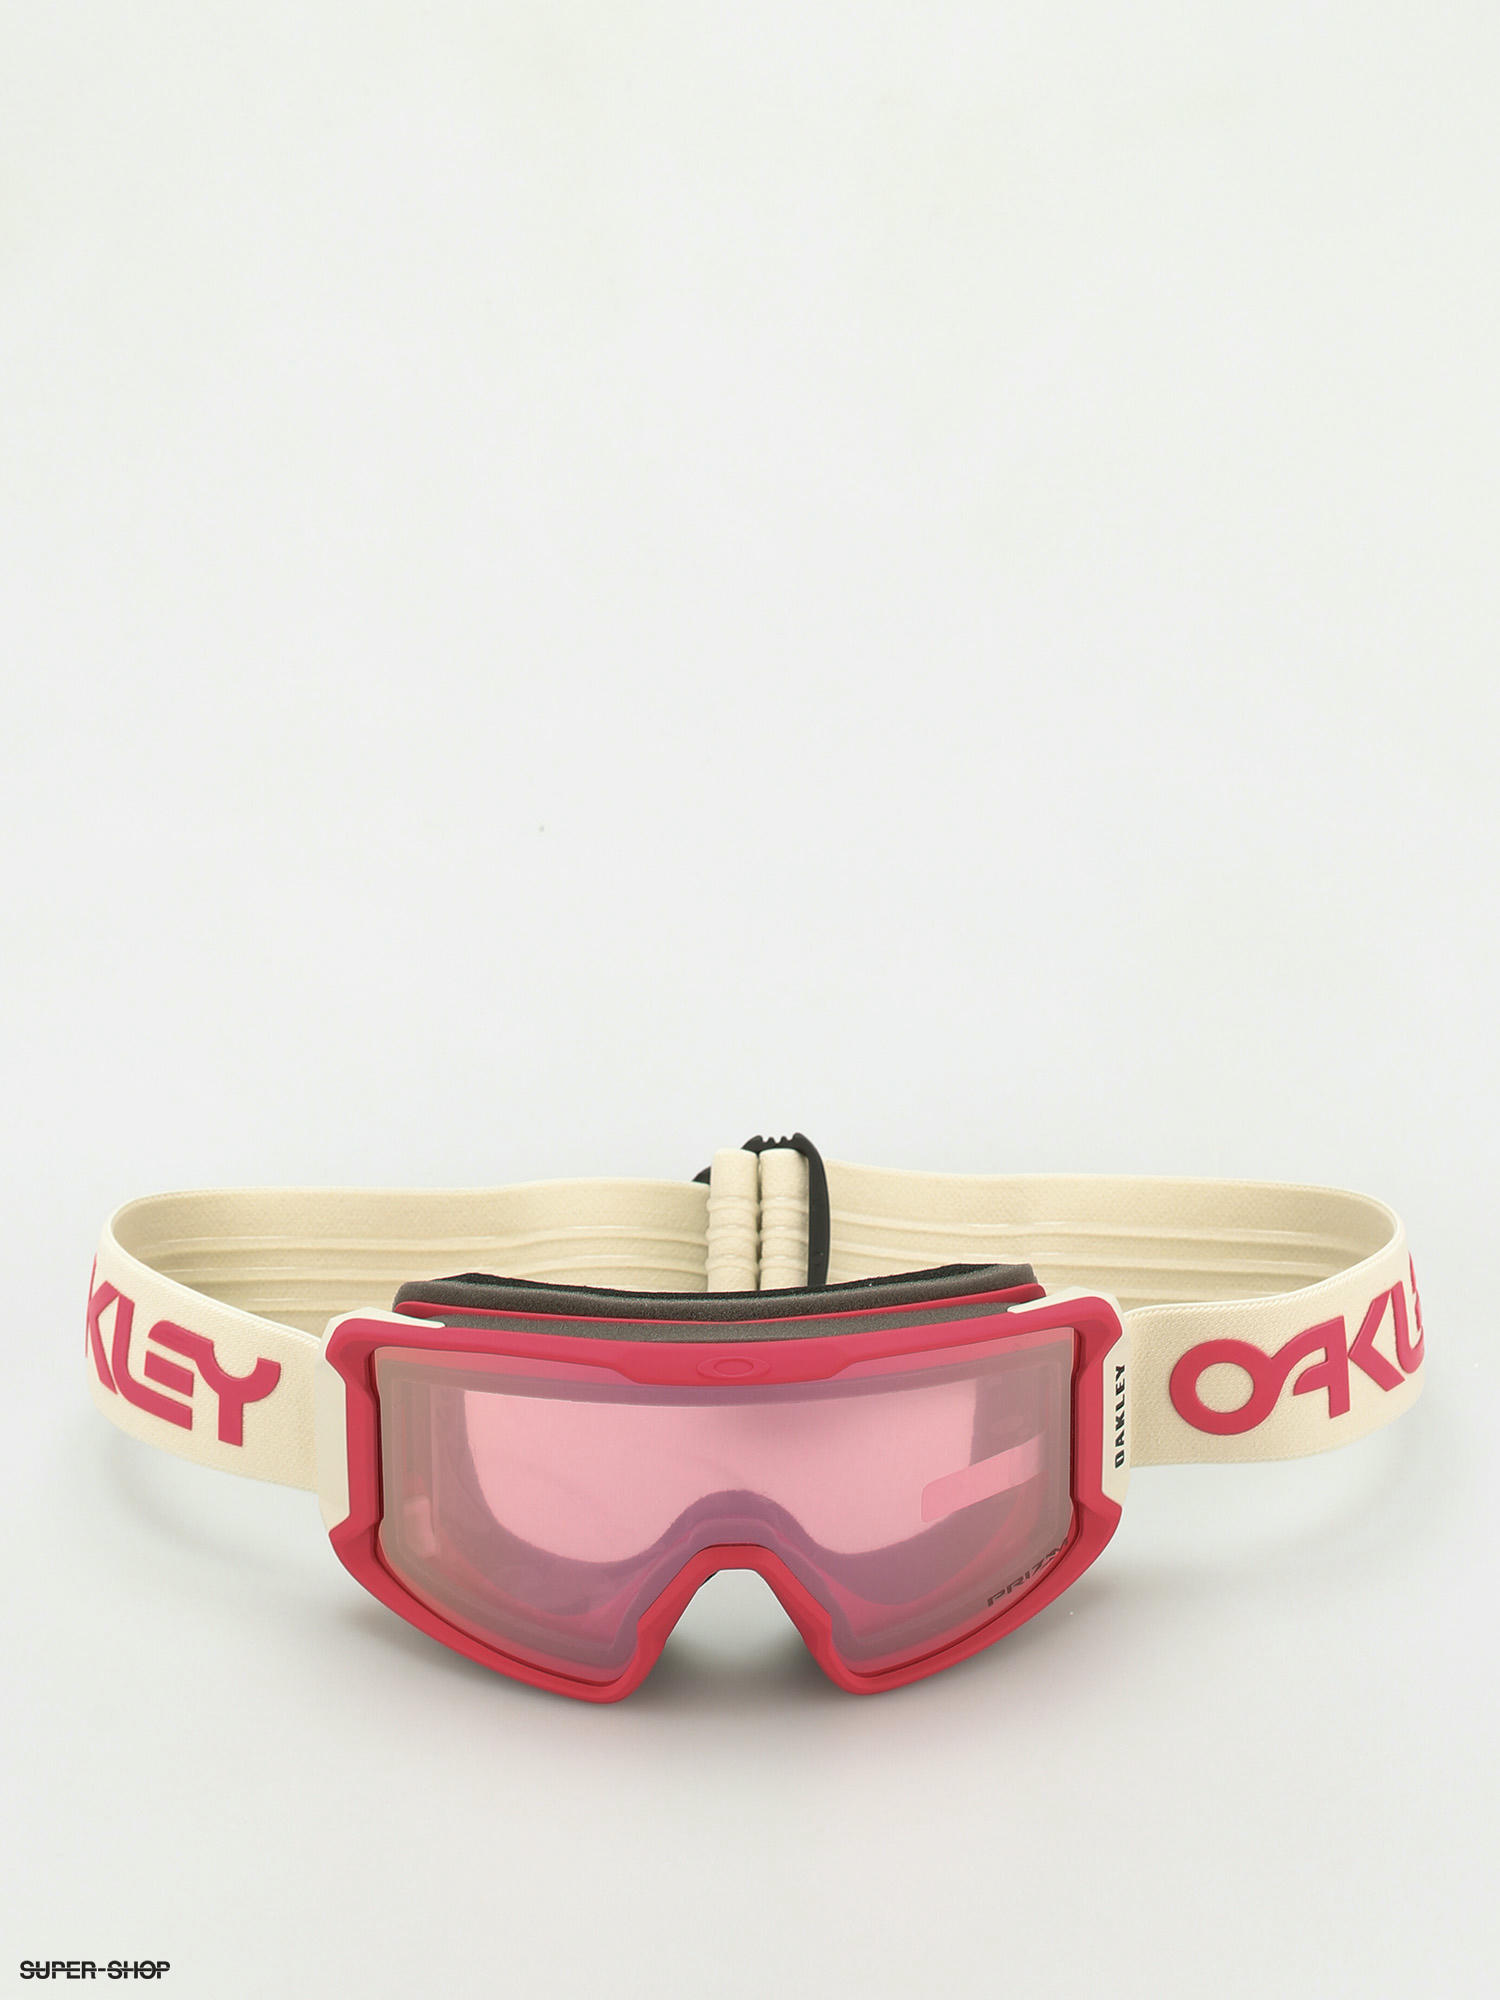 Reitmans MarsQuest - Cylindrical Designer Snow Goggle